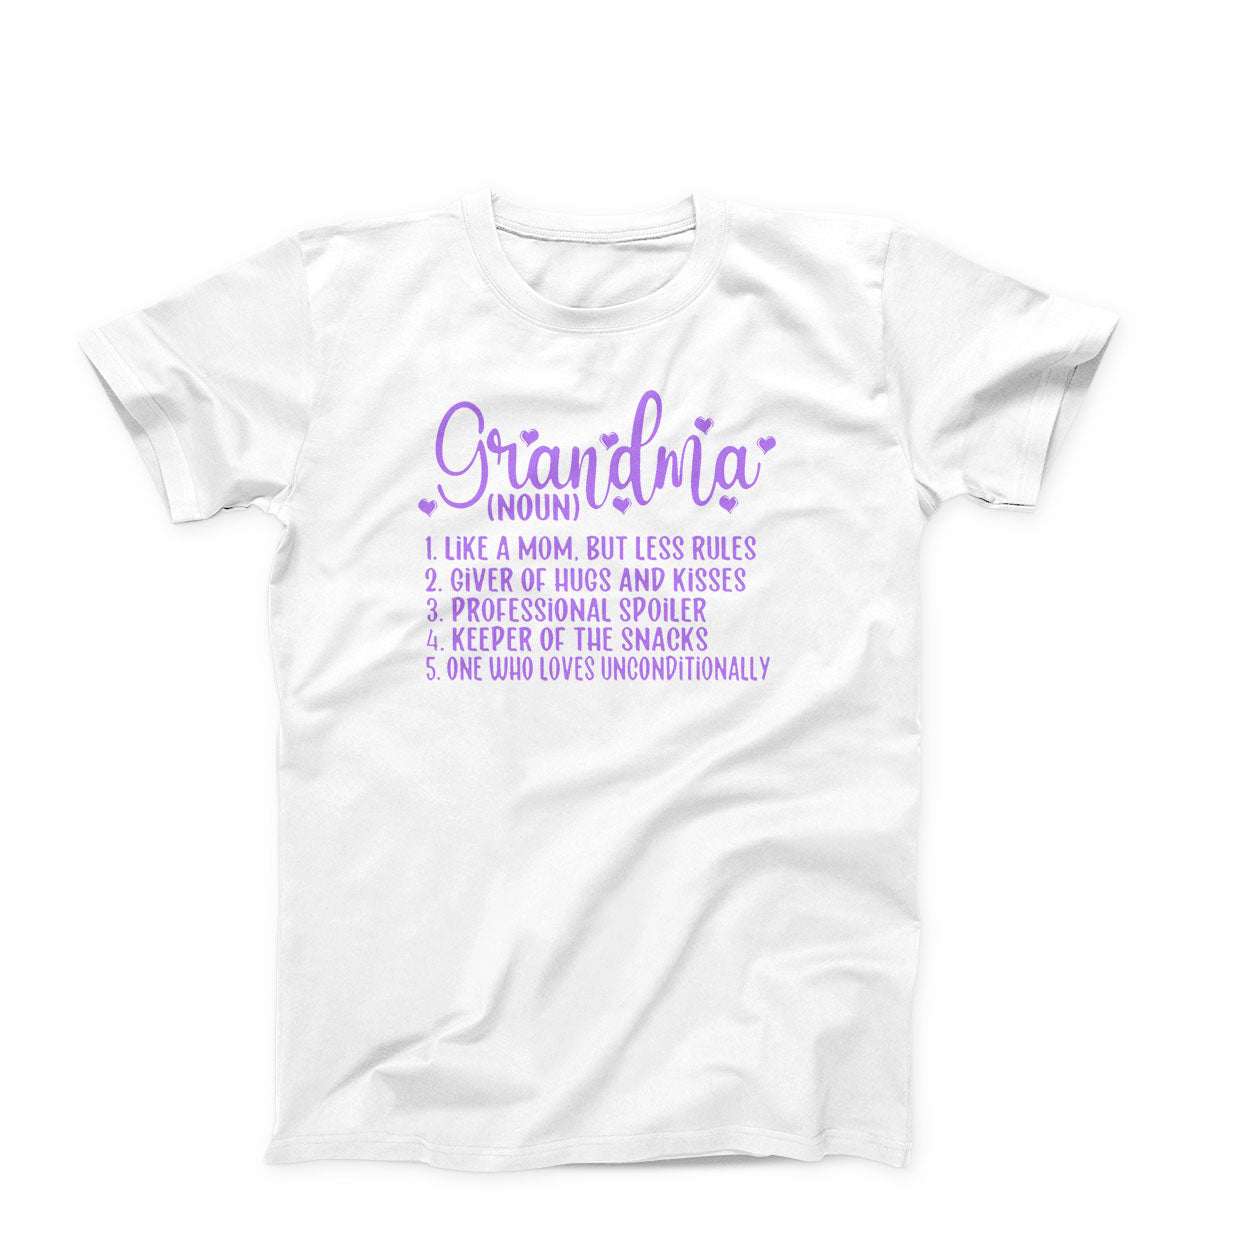 T-shirt:  Grandma (Noun)